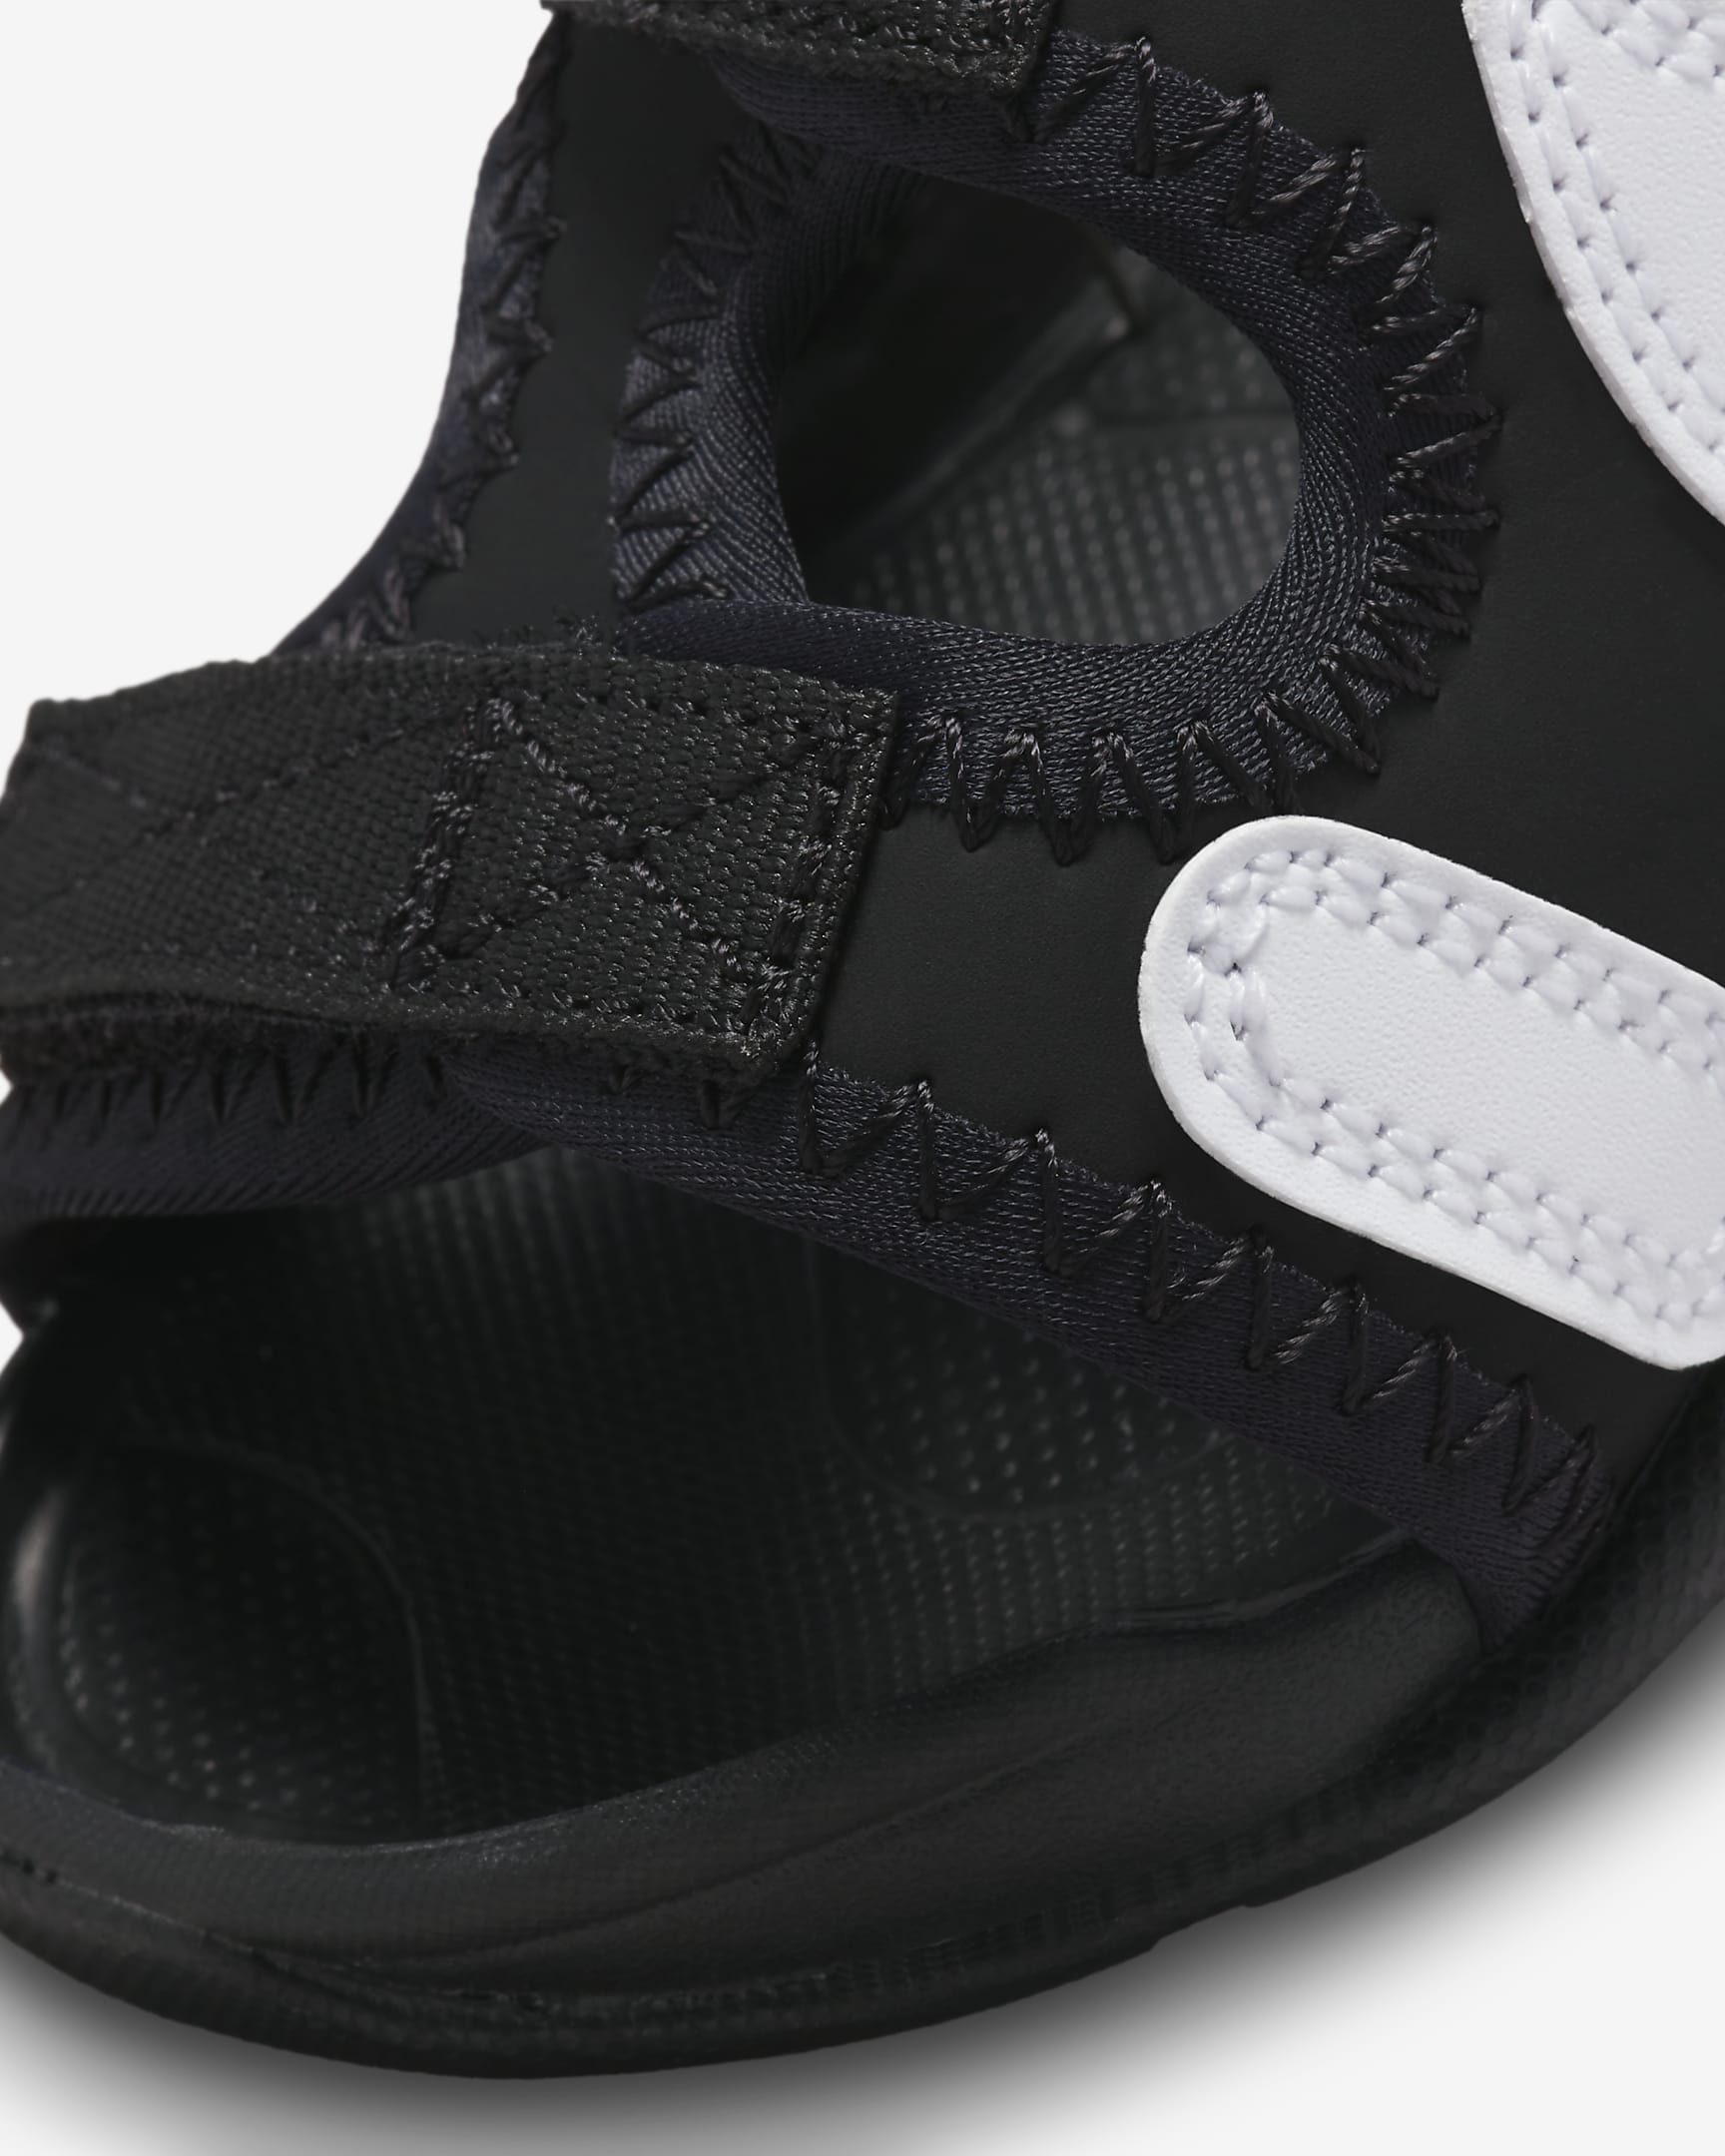 Nike Sunray Adjust 6 Baby/Toddler Slides. Nike SK